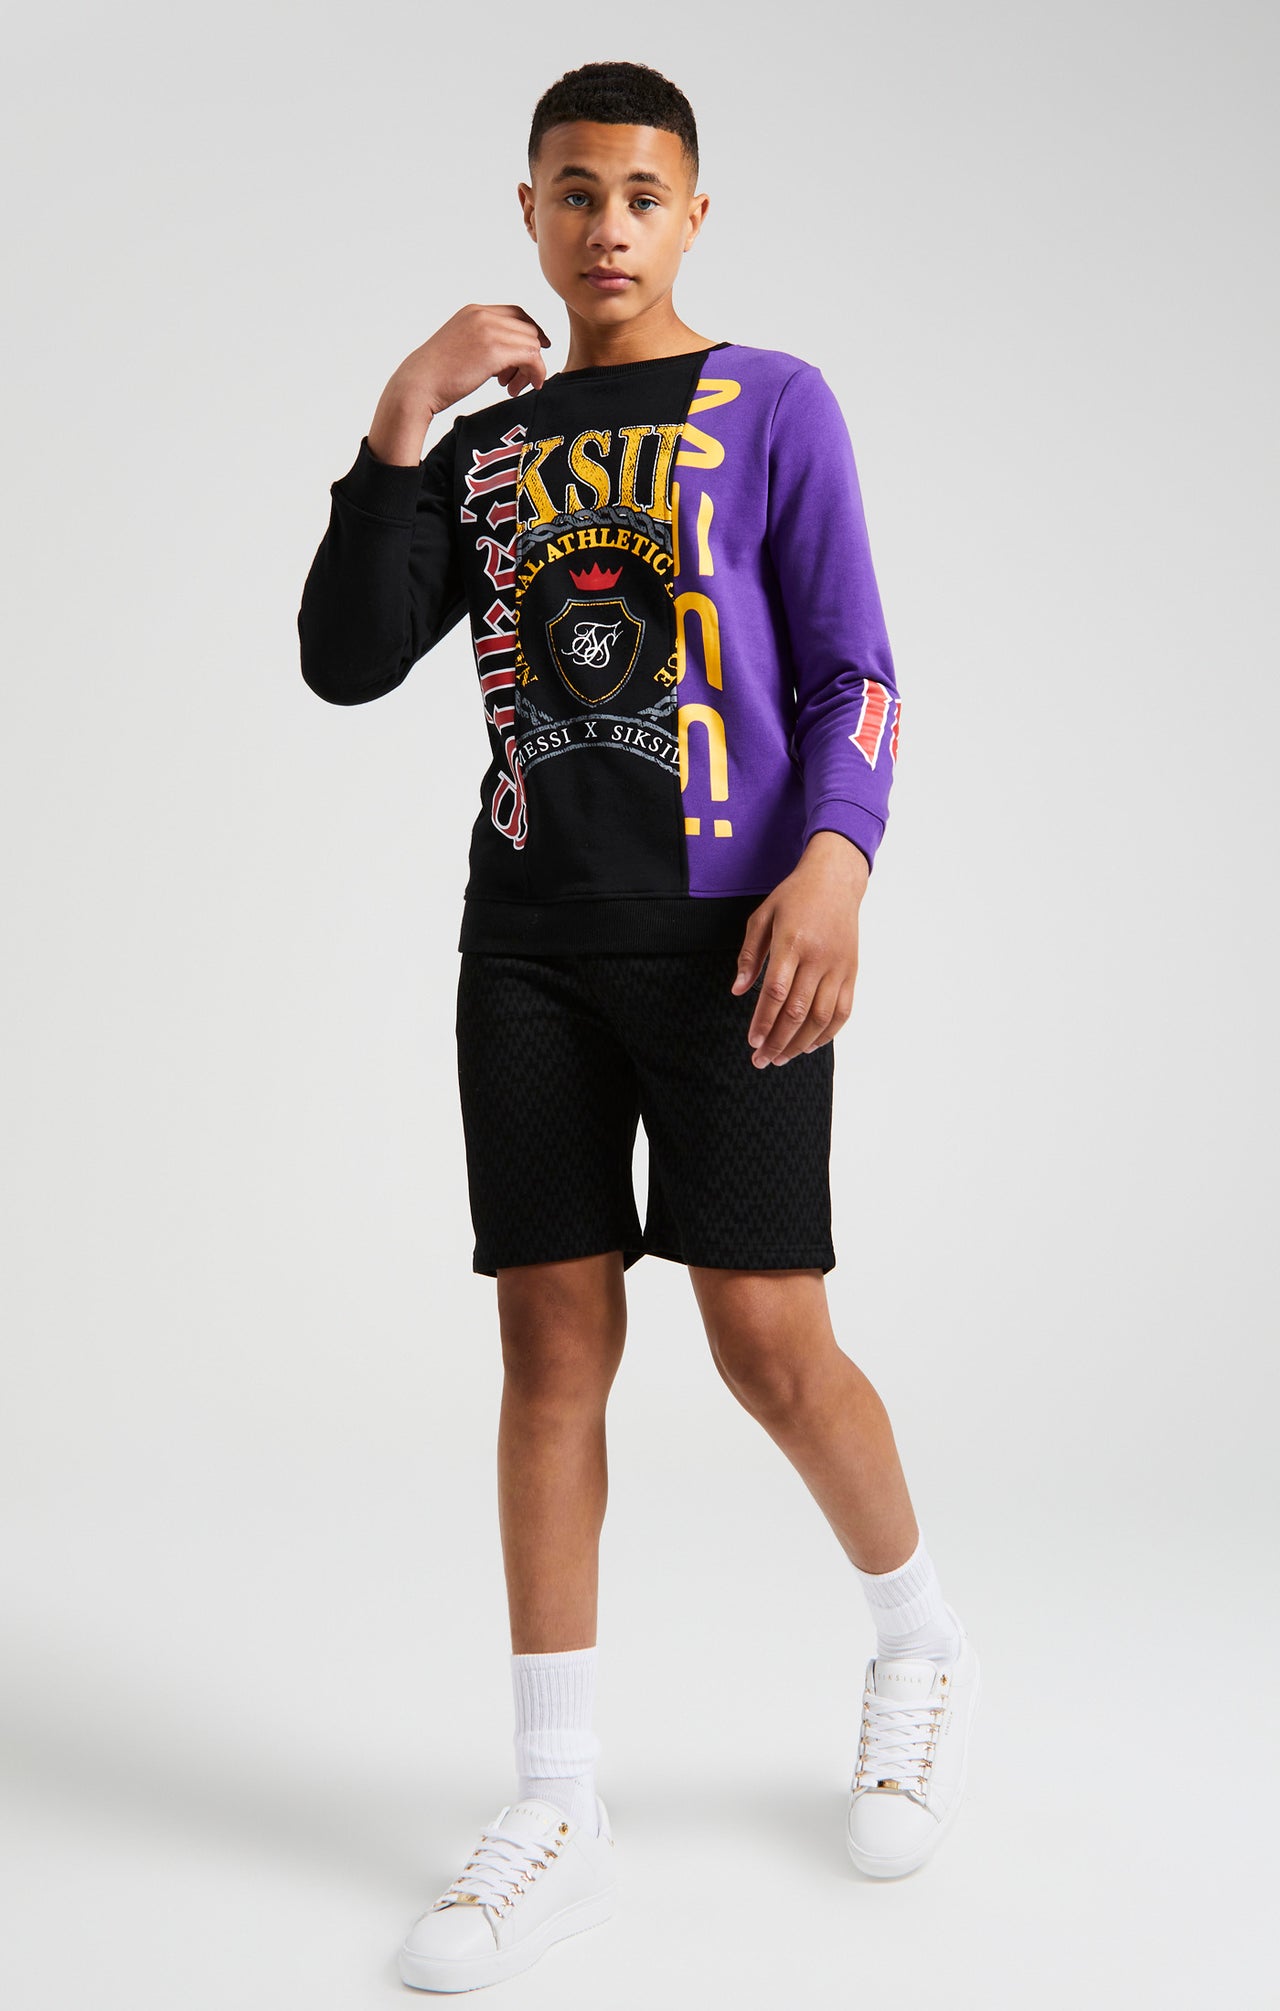 Messi x SikSilk Retro Varsity Crew Sweater - Black & Purple (4)